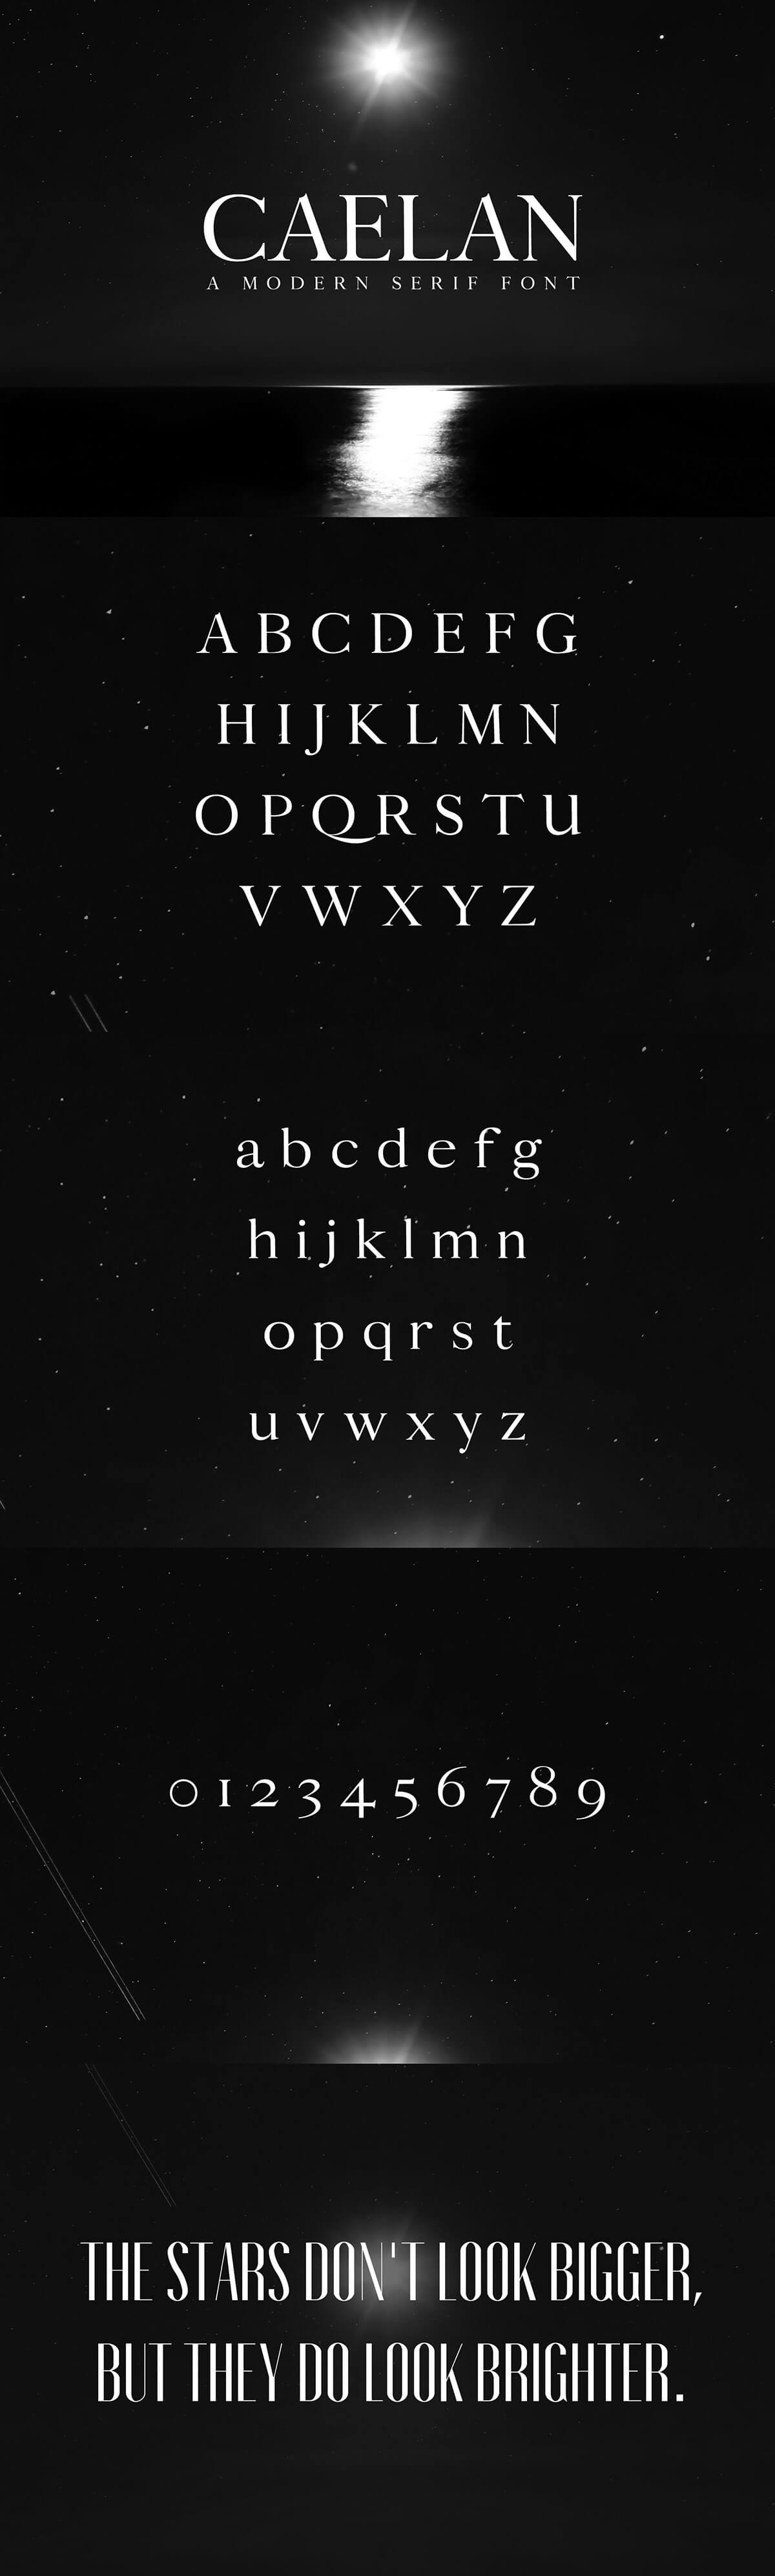 Free Calean Serif Font